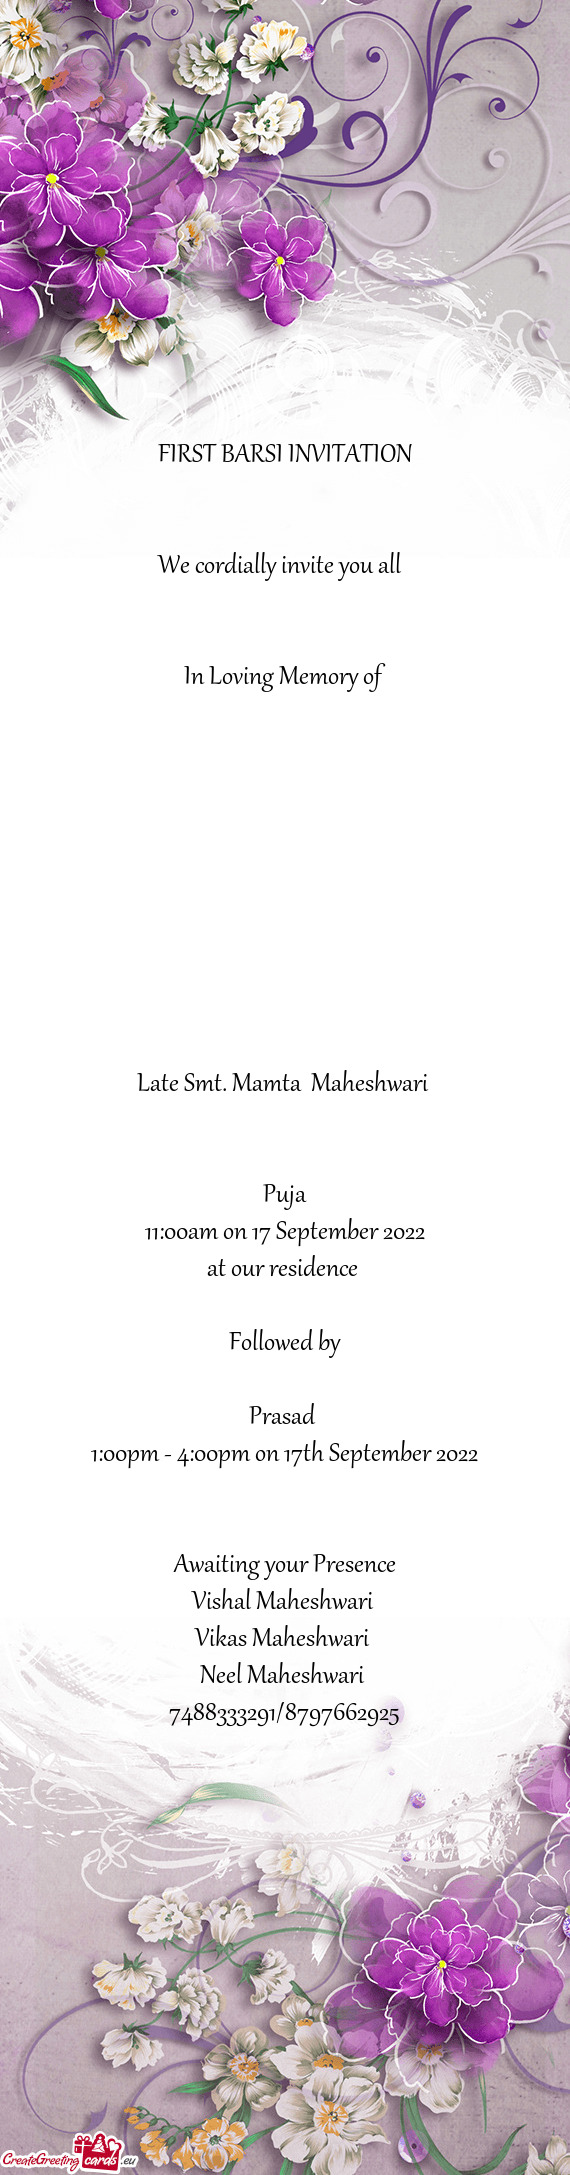 Late Smt. Mamta Maheshwari